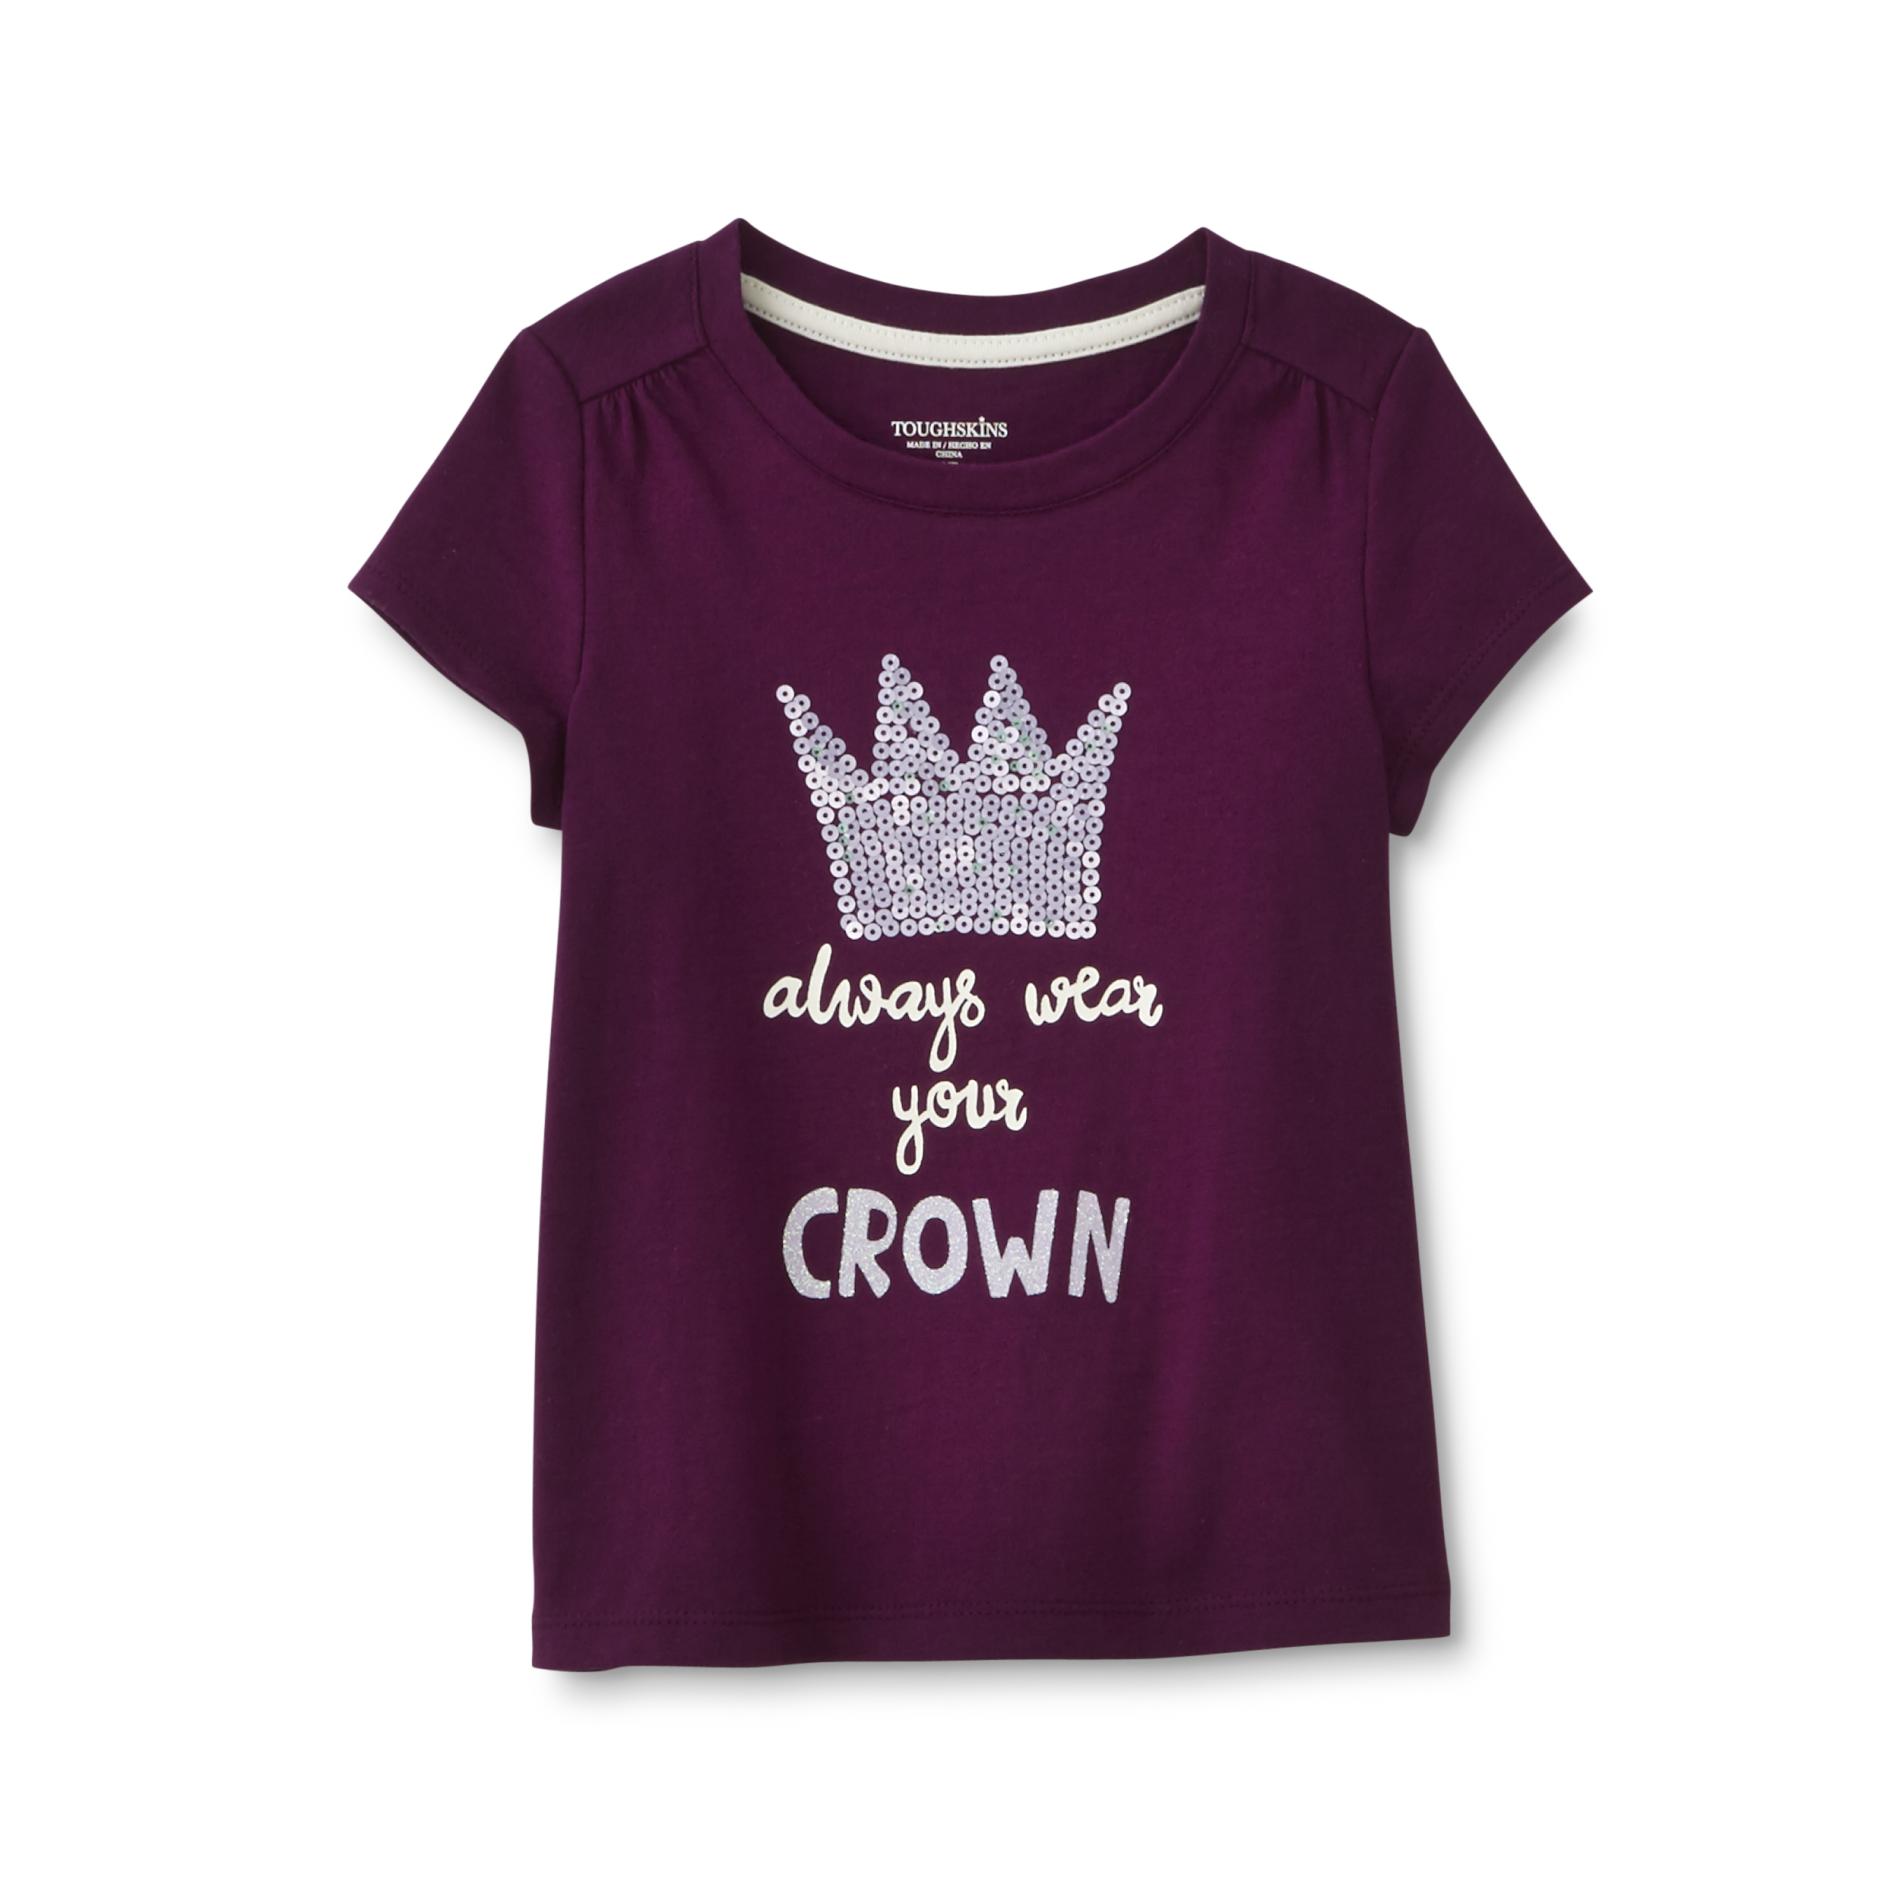 Toughskins Infant & Toddler Girl's Short-Sleeve Top - Crown